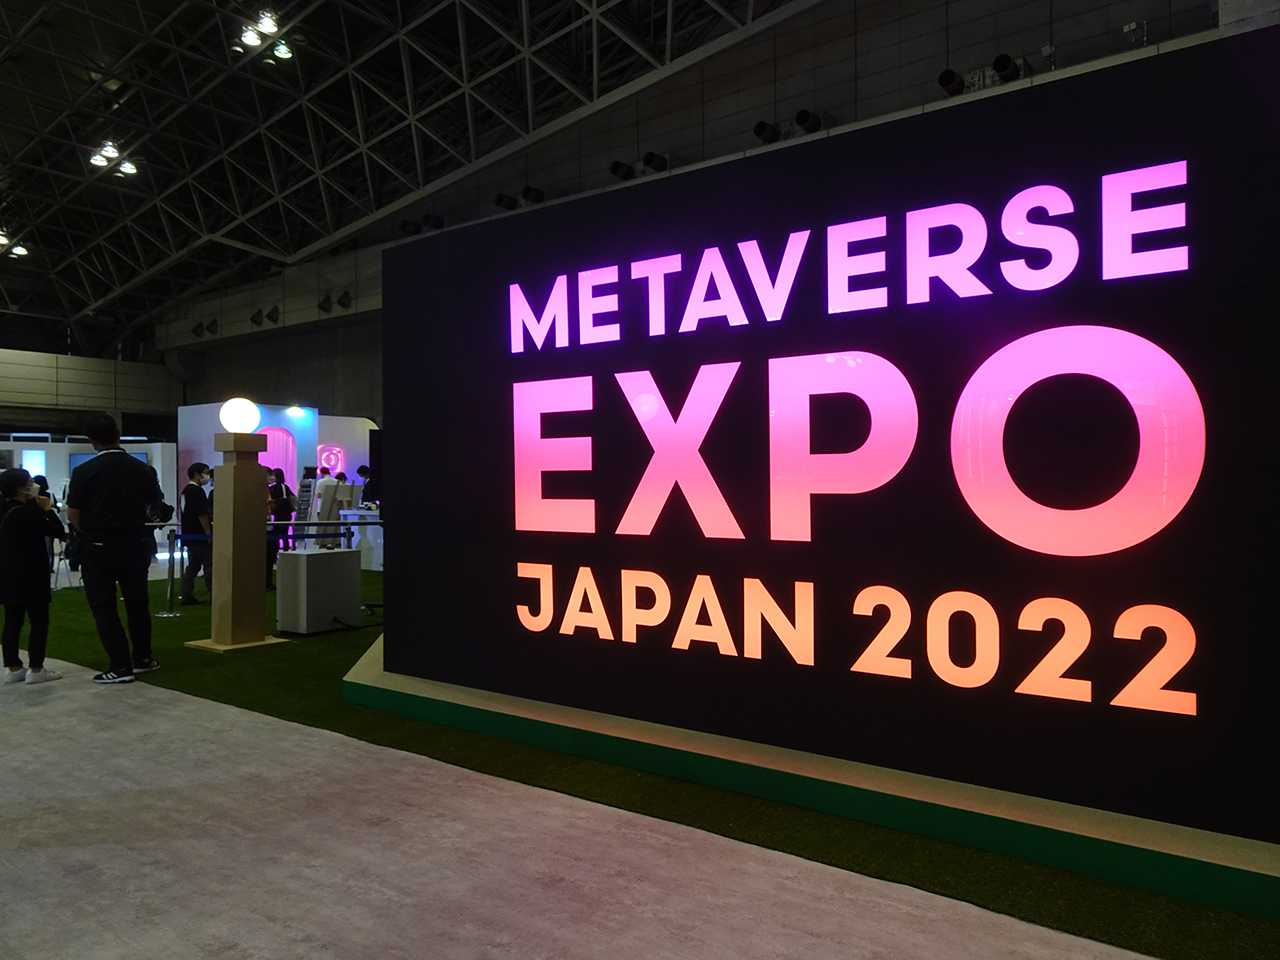 「METAVERSE EXPO JAPAN 2022」ではメタバースの最新展示が集結している